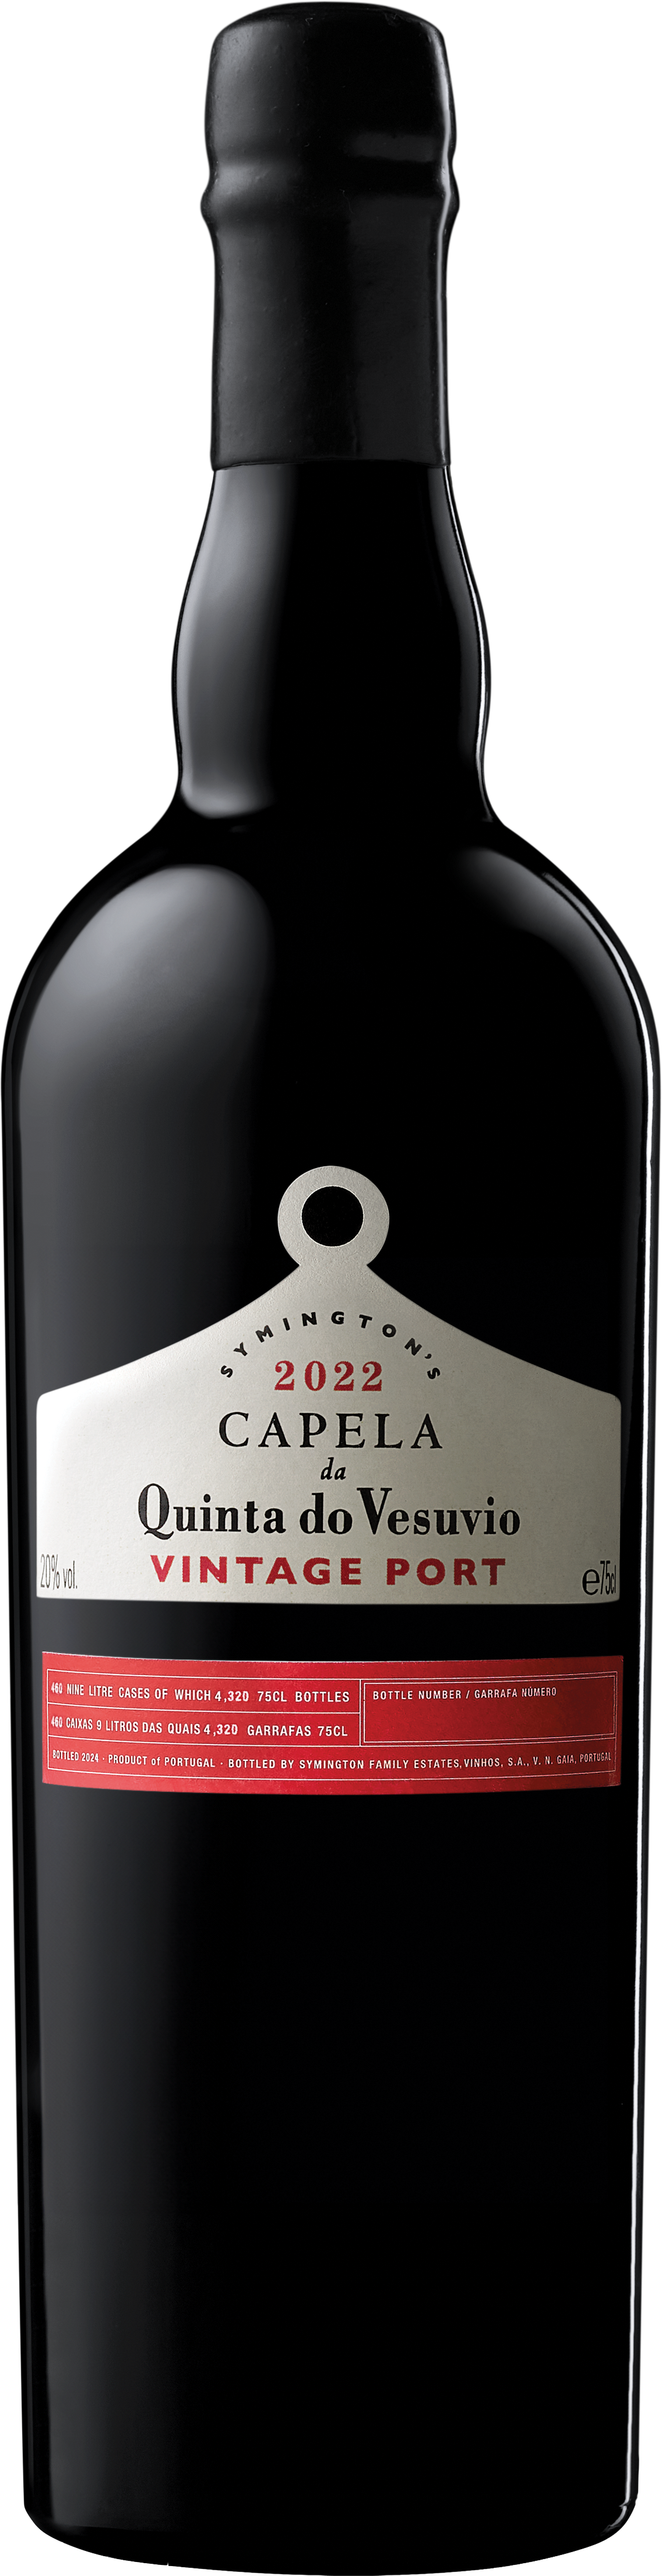 Product Image for "CAPELA DA QUINTA DO VESUVIO" VINTAGE PORT 2022